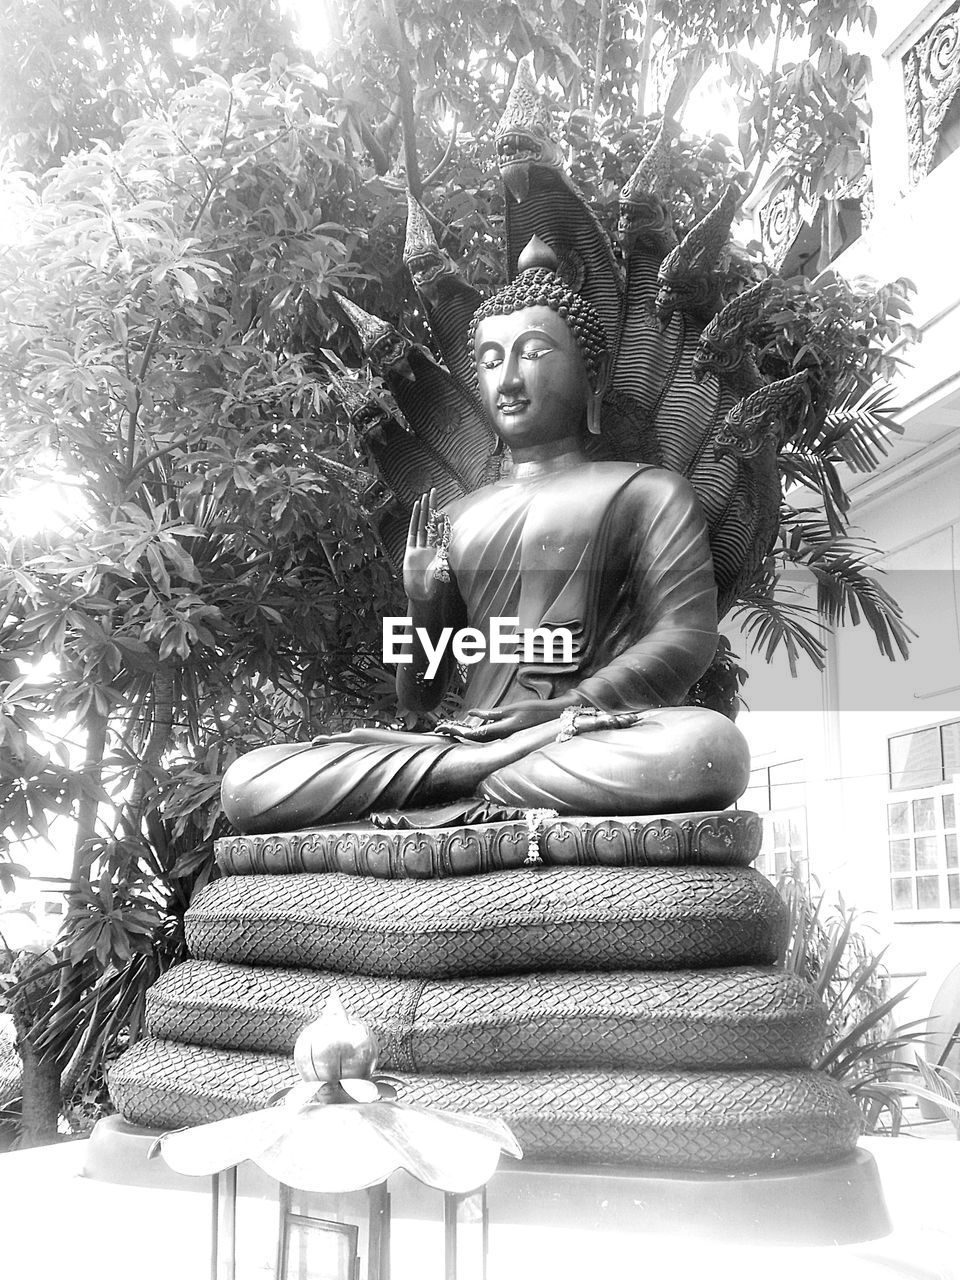 LOW ANGLE VIEW OF BUDDHA STATUE